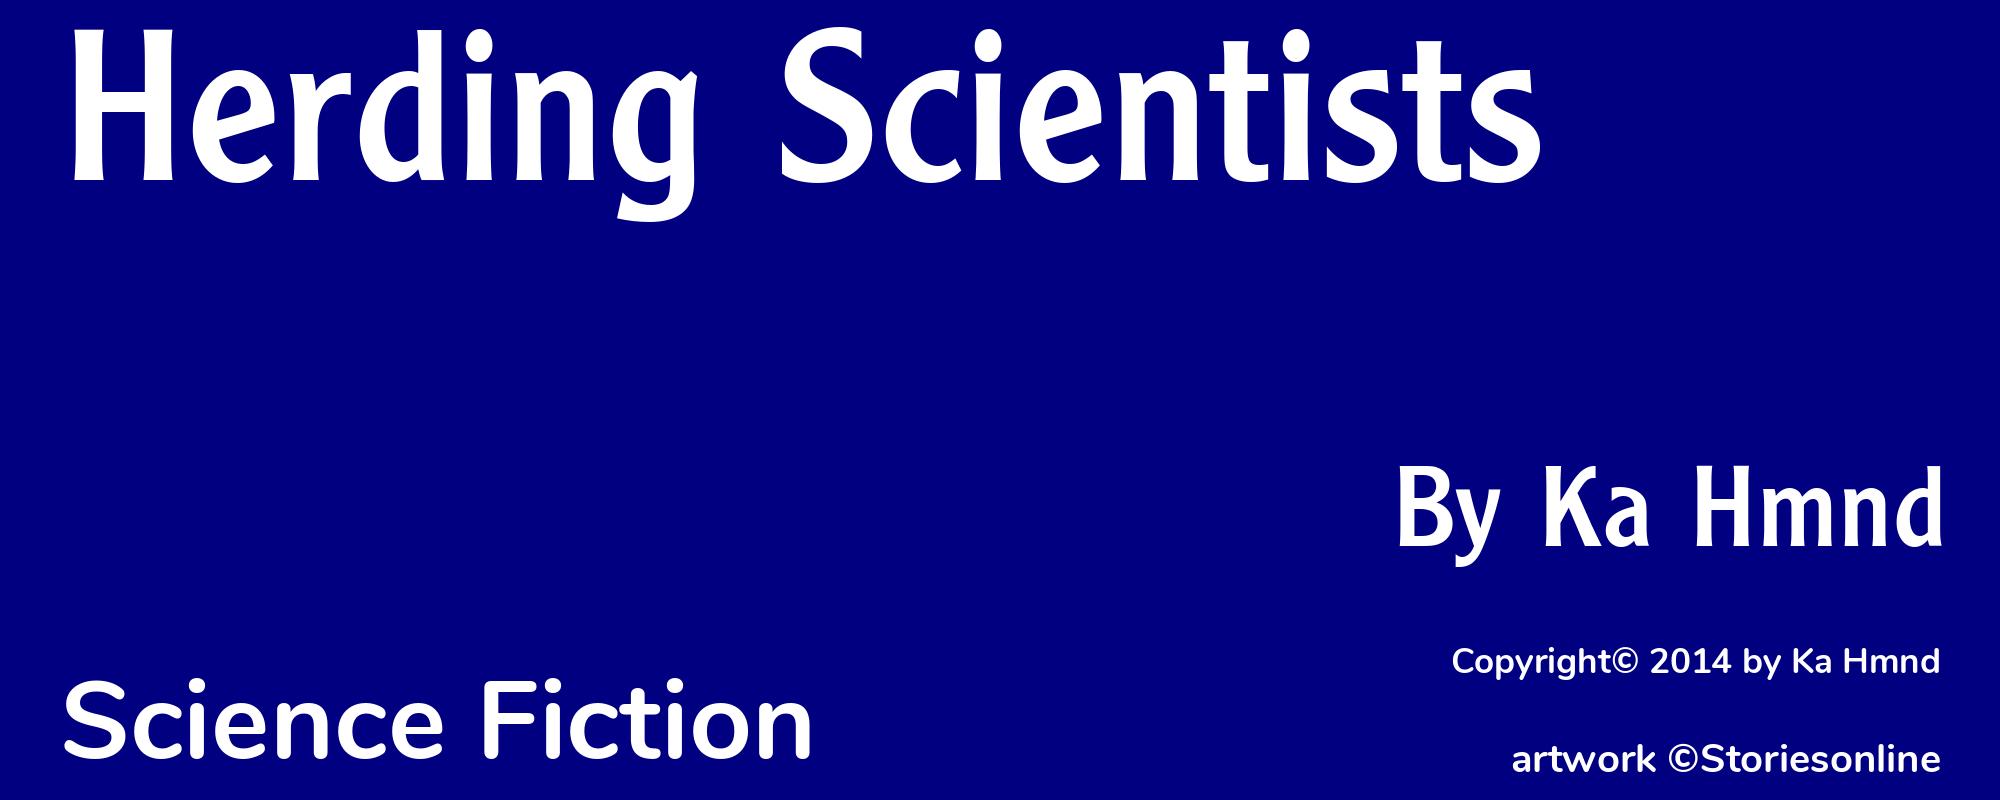 Herding Scientists - Cover